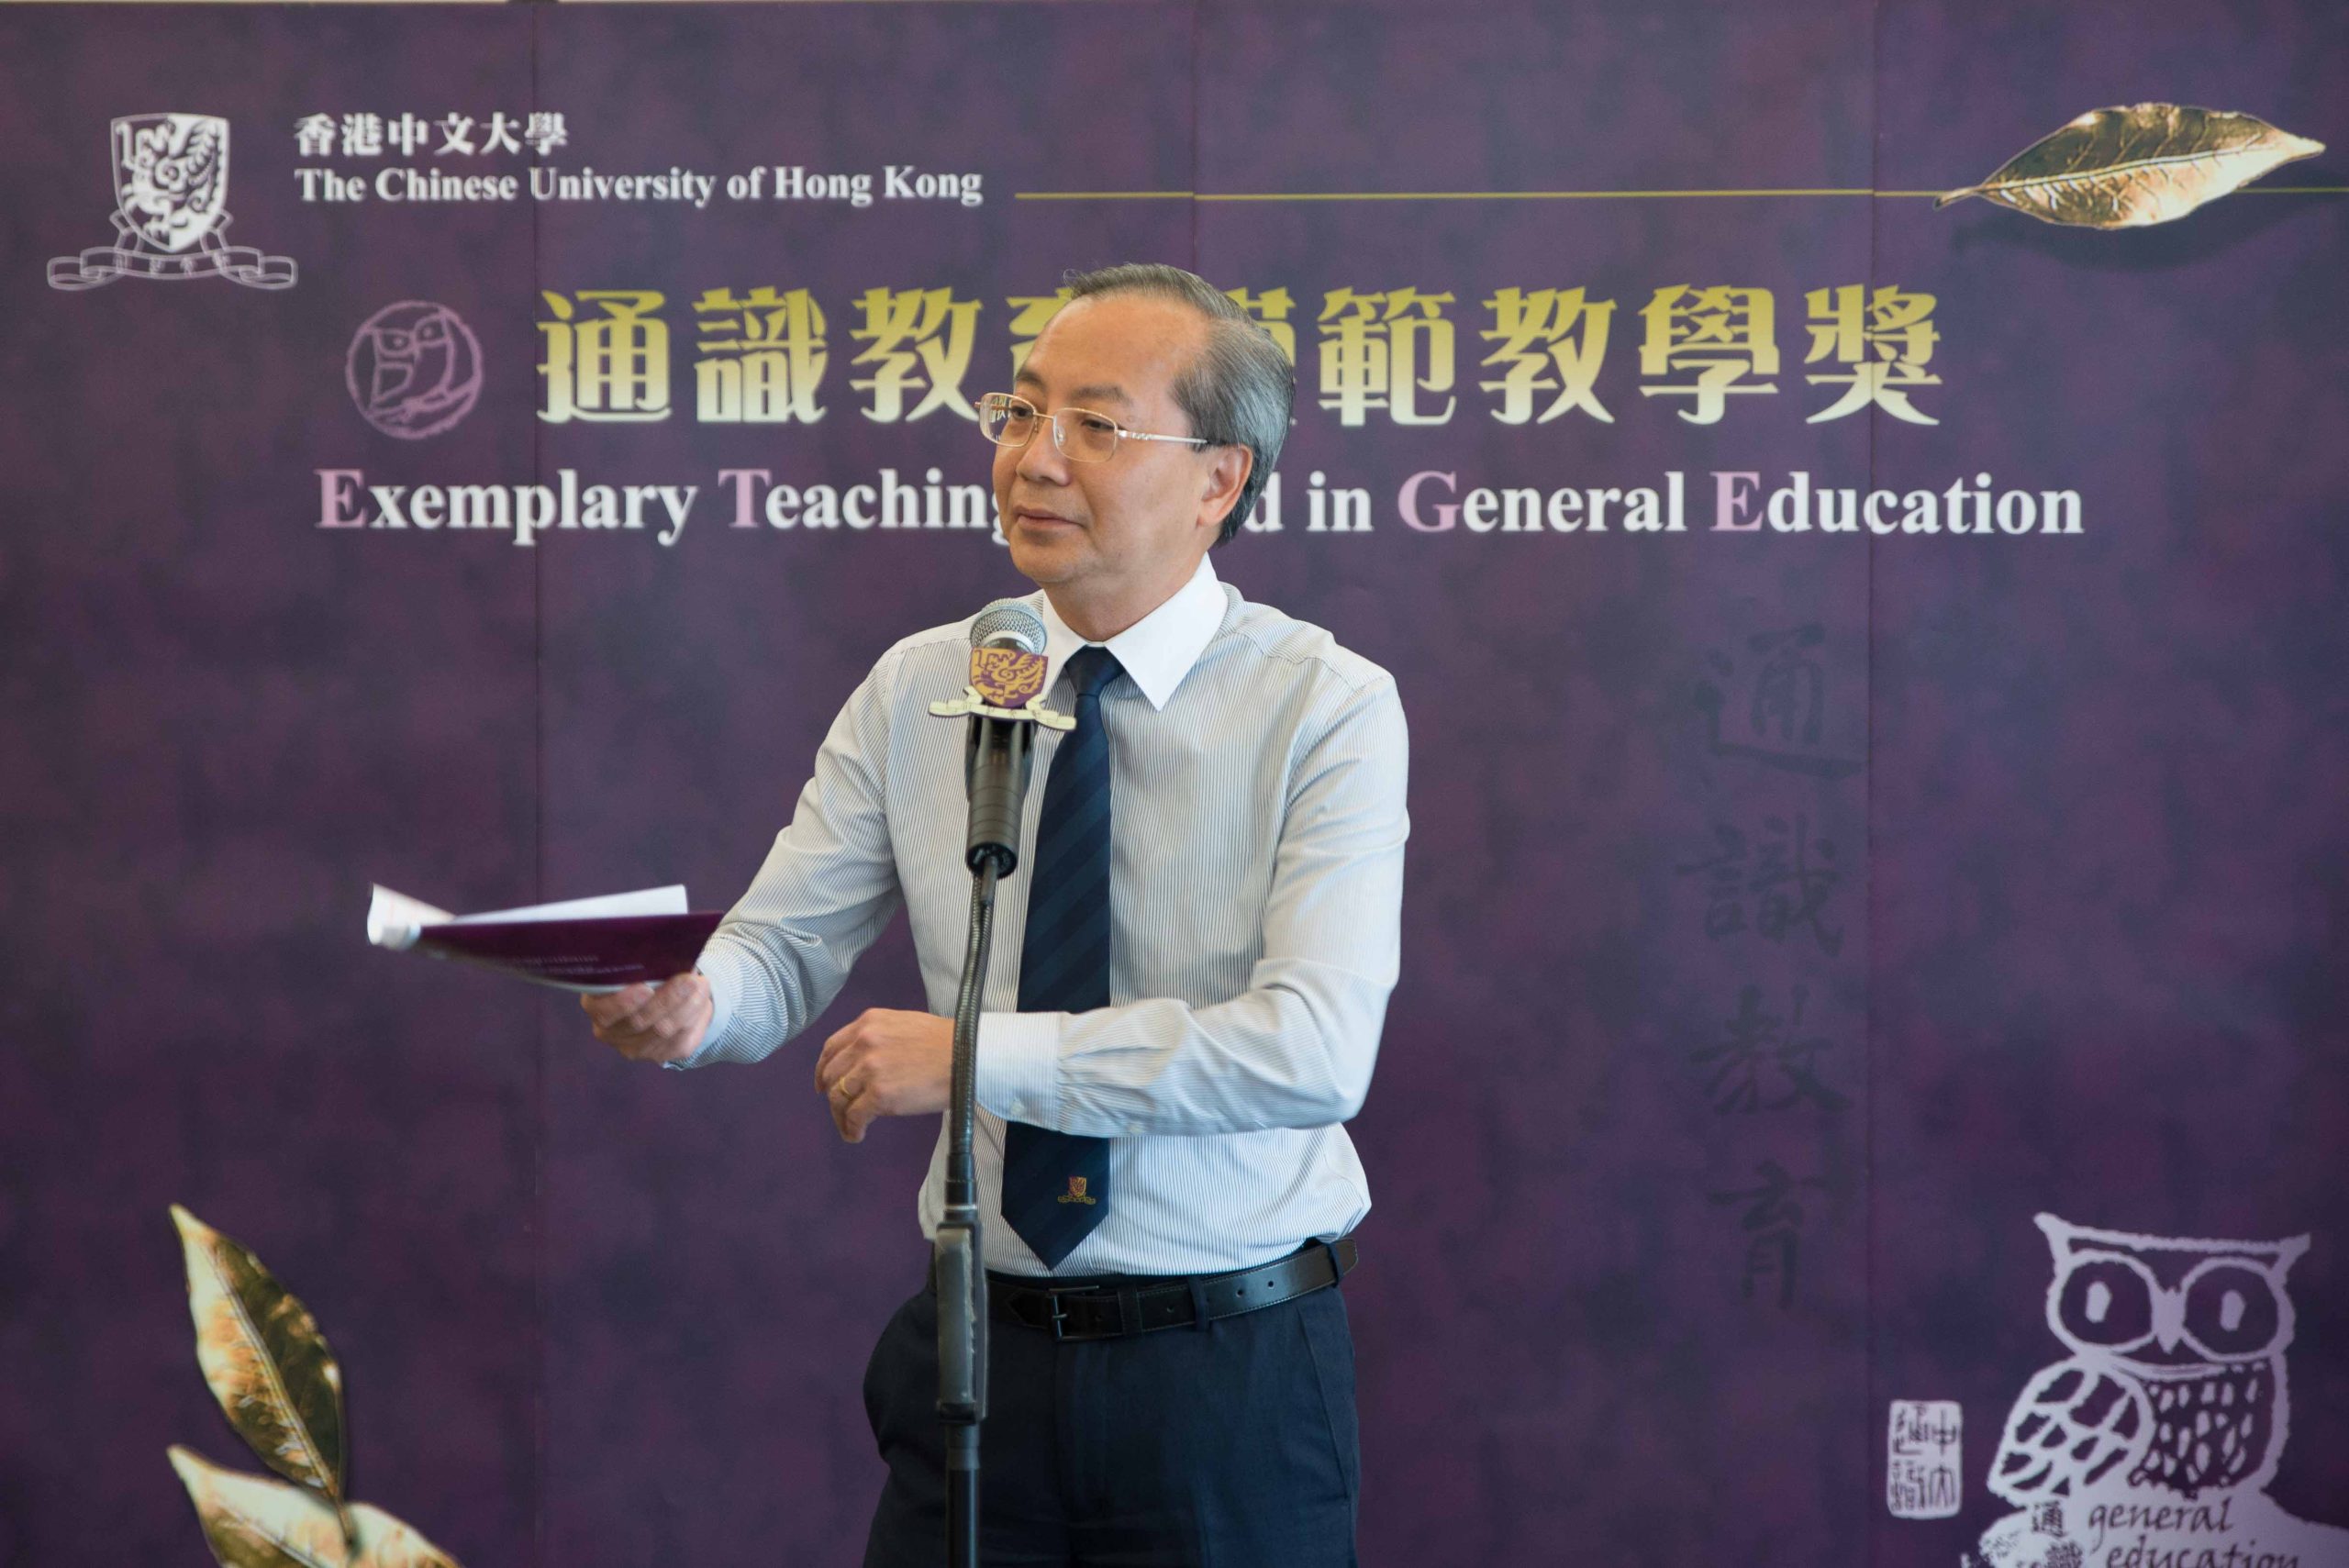 Introduction of Dr. Tong Shiu Sing by Professor Ng Hang Leung Dickon, Chairman of the Department of Physics